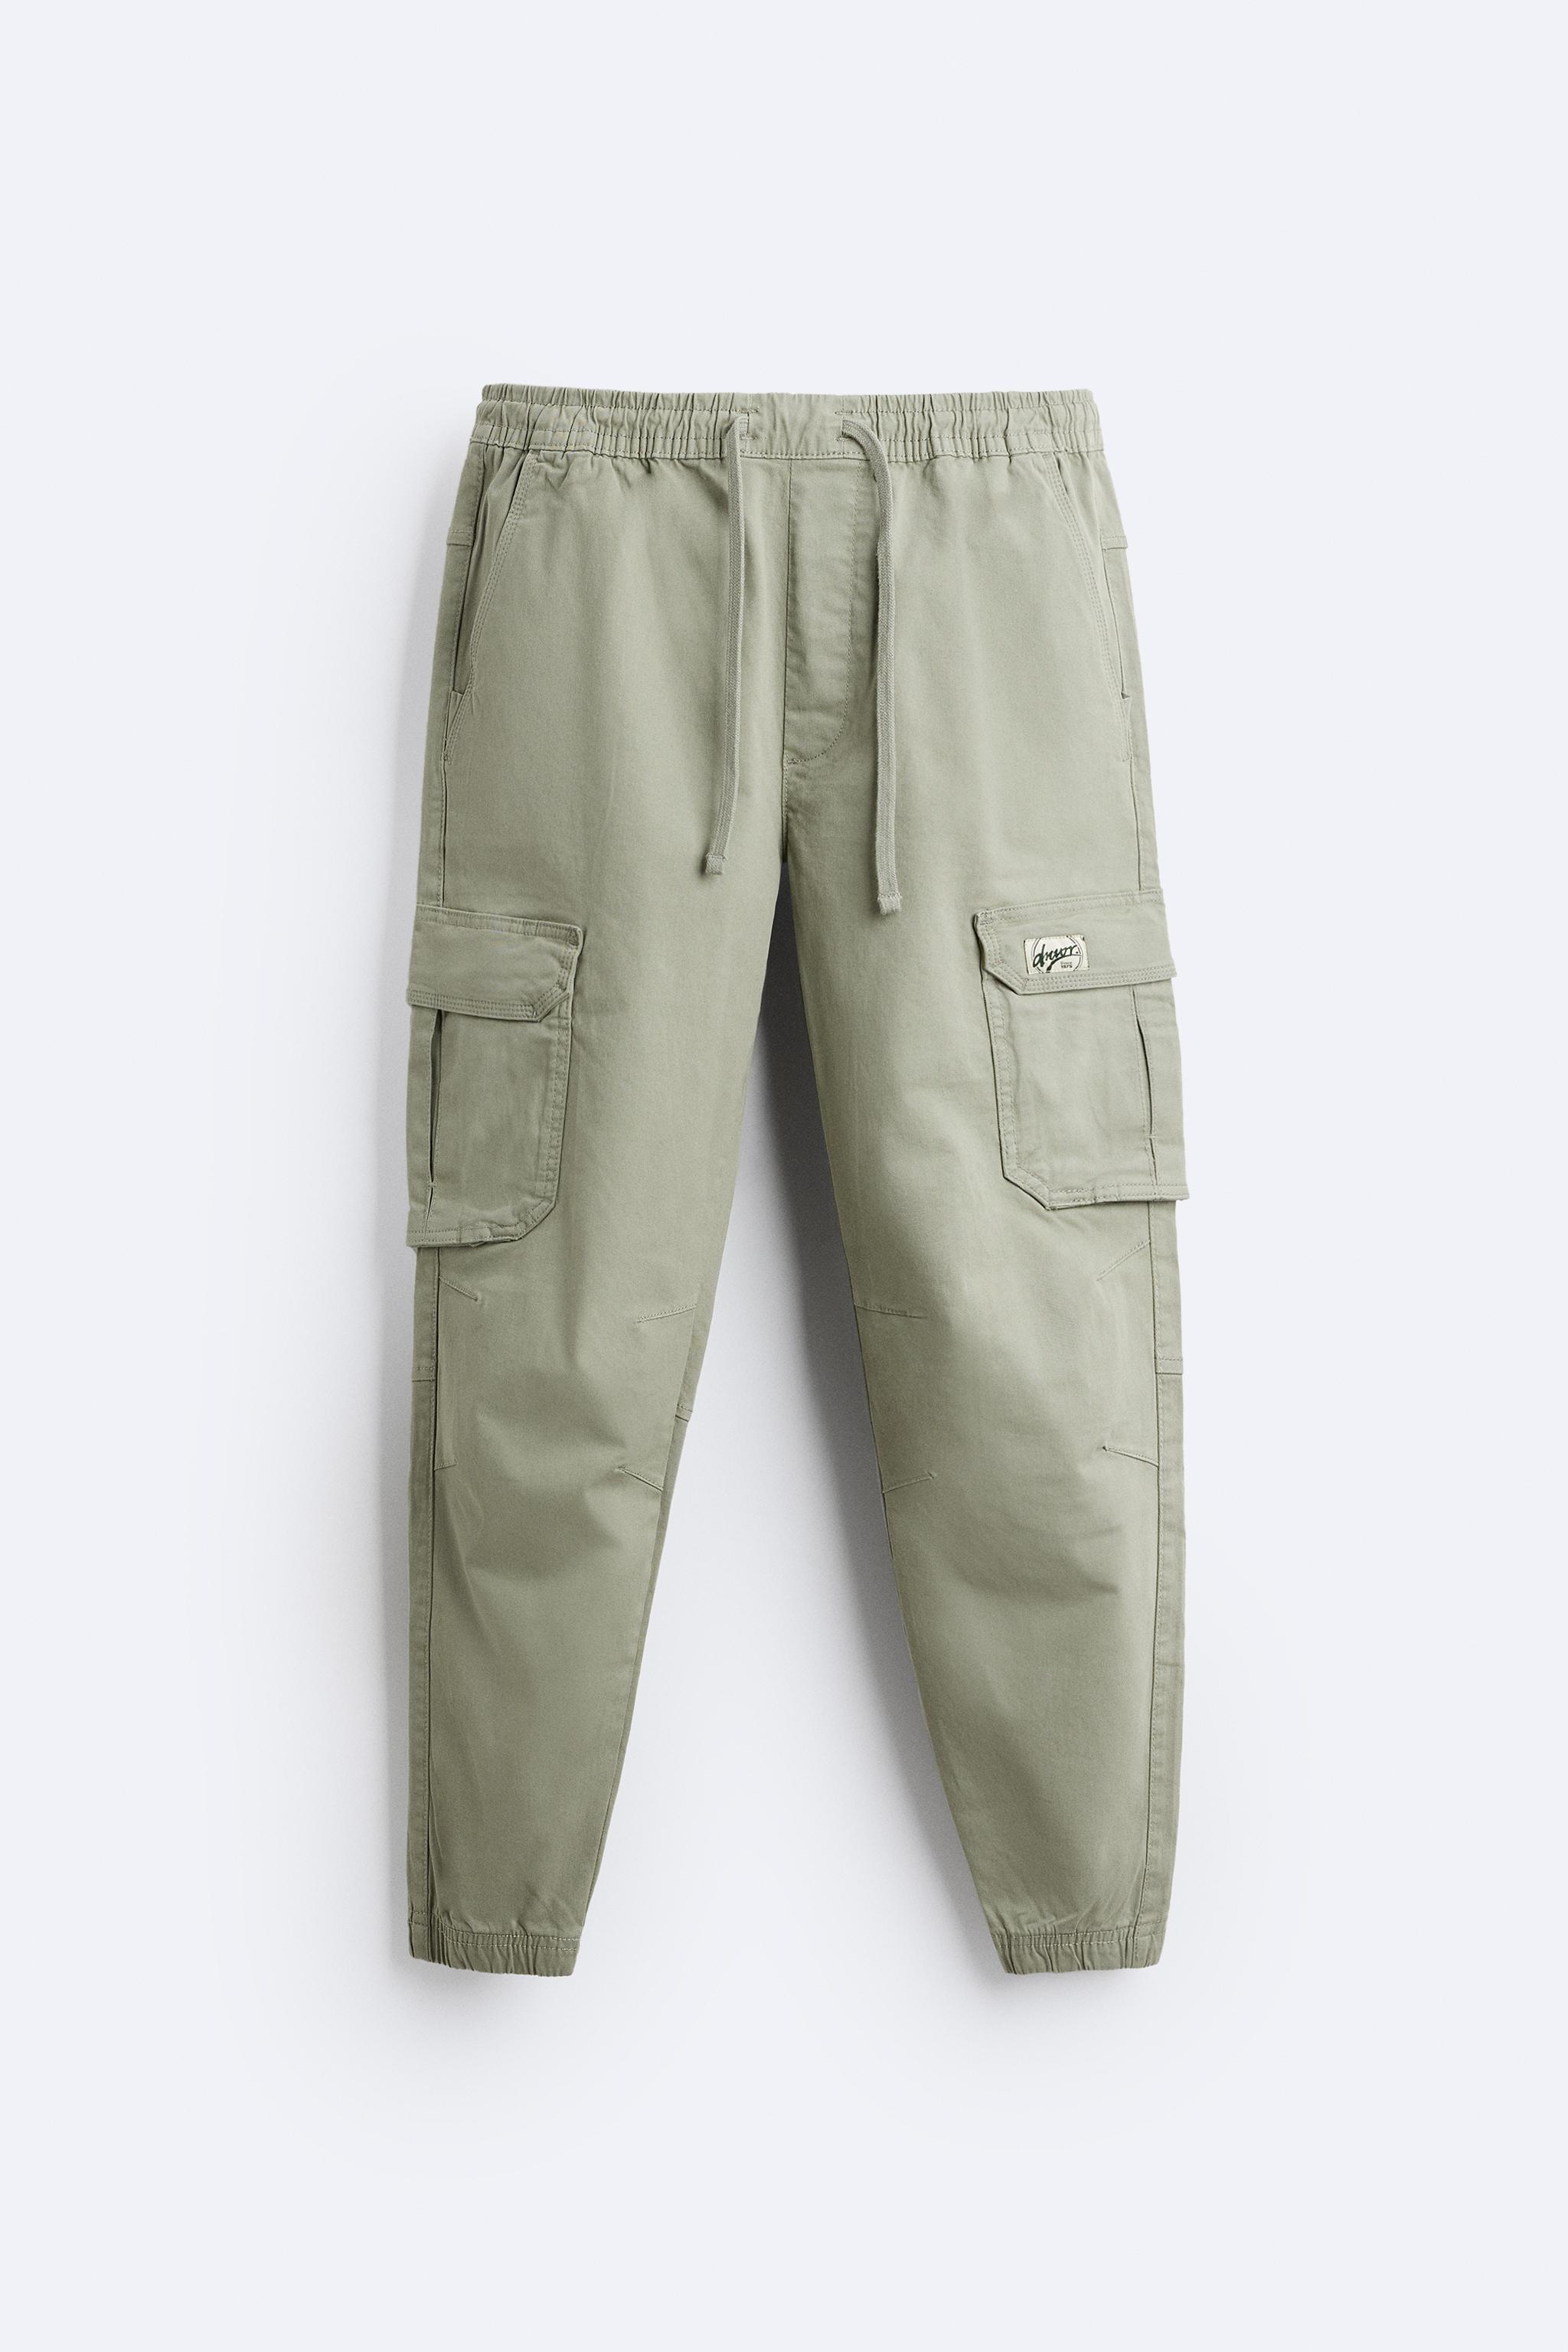 Zara Cargo Pants & Pocket pants sale - discounted price